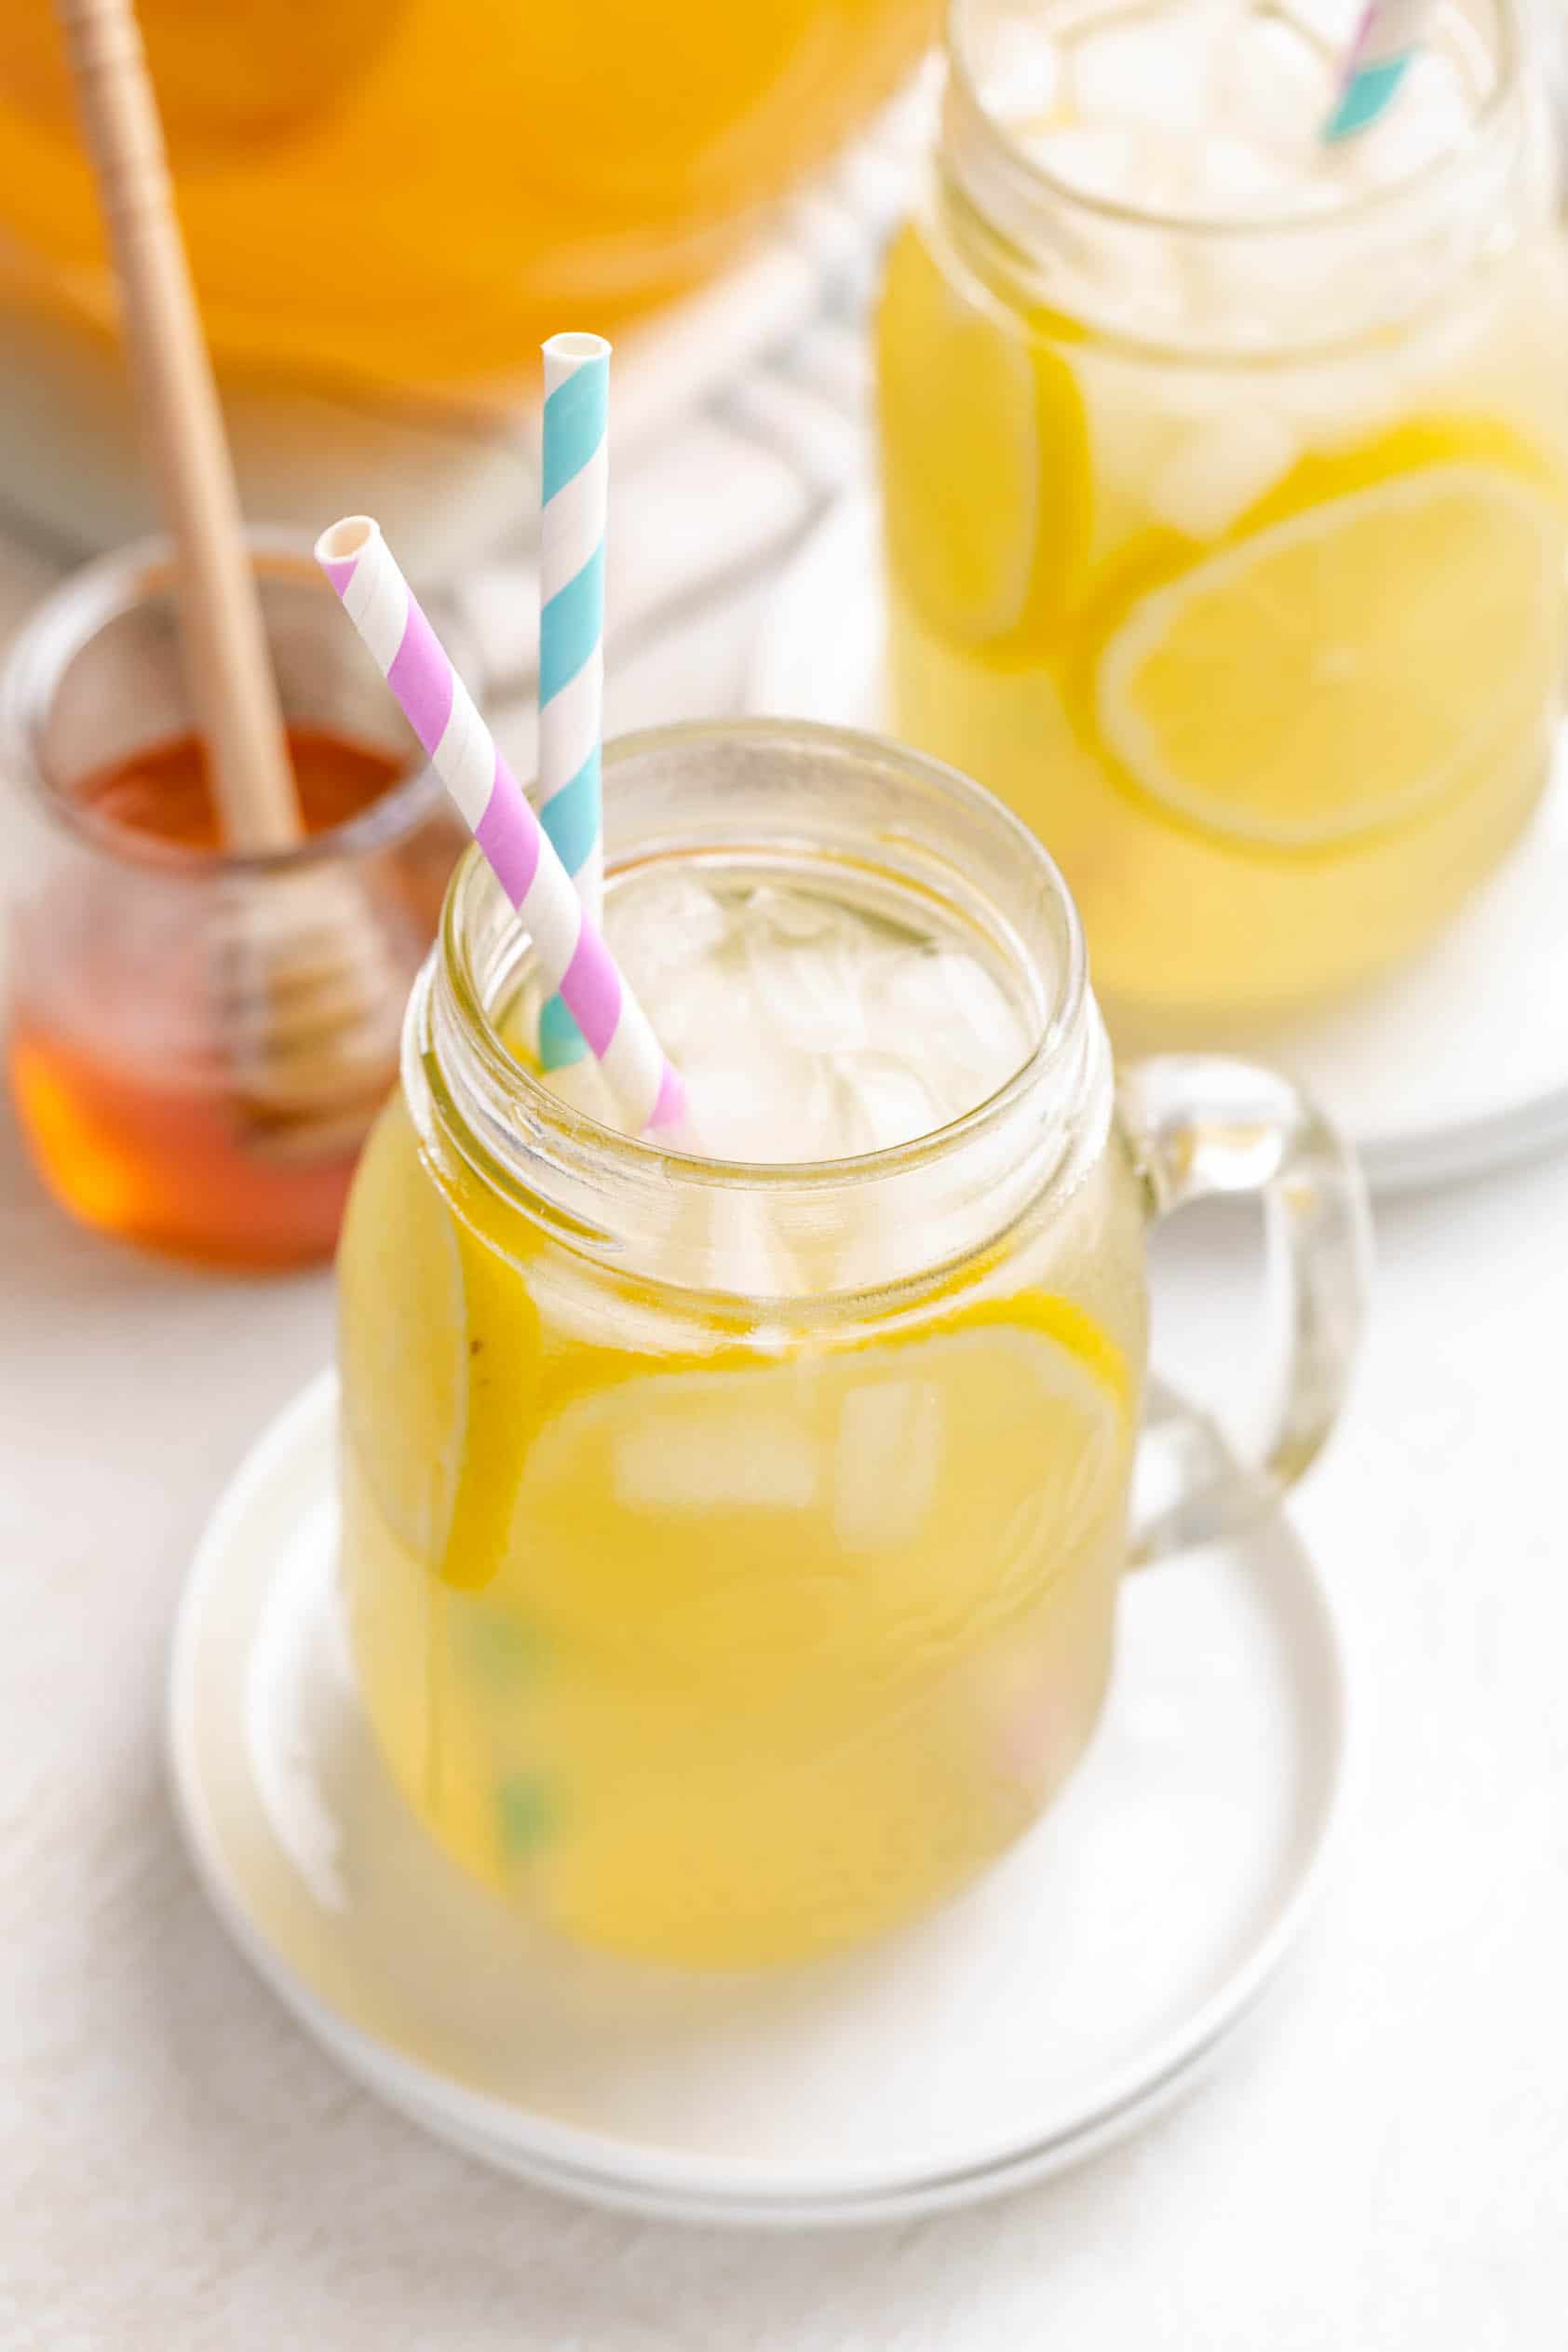 Two straws in a glass of honey lemonade.